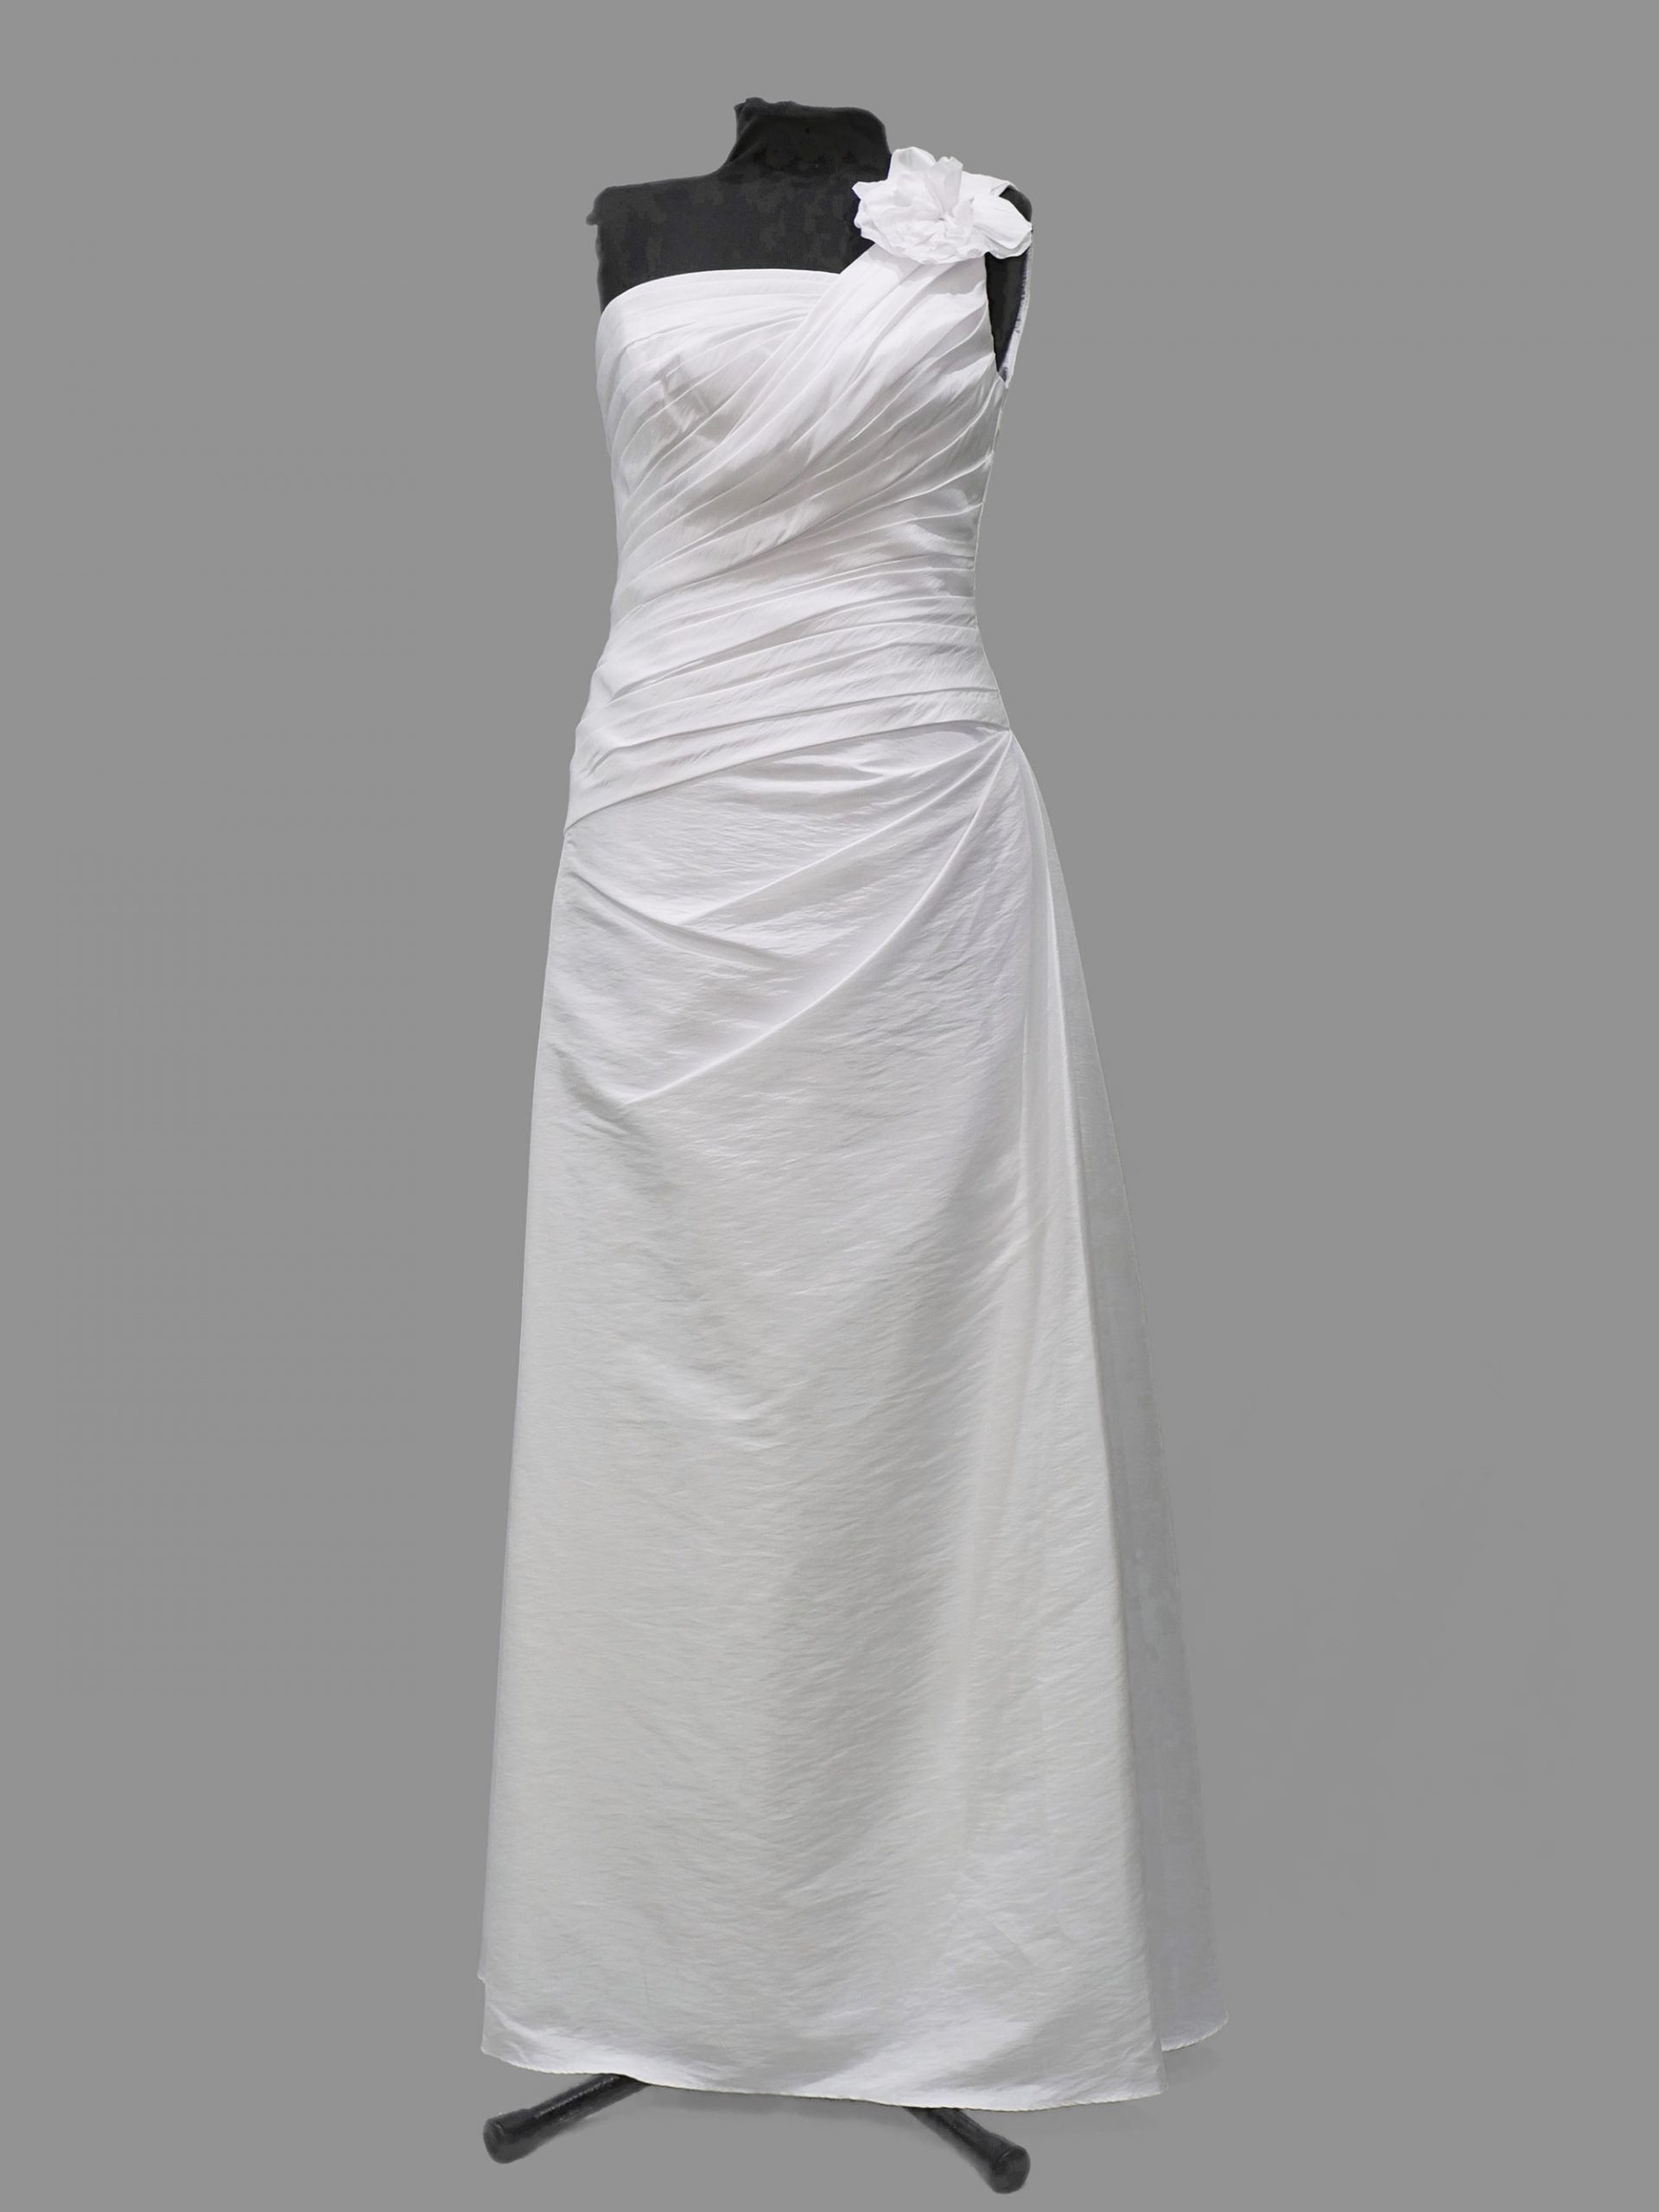 Simple wedding/debutante dress, white taffeta, Crux CB117, small size12